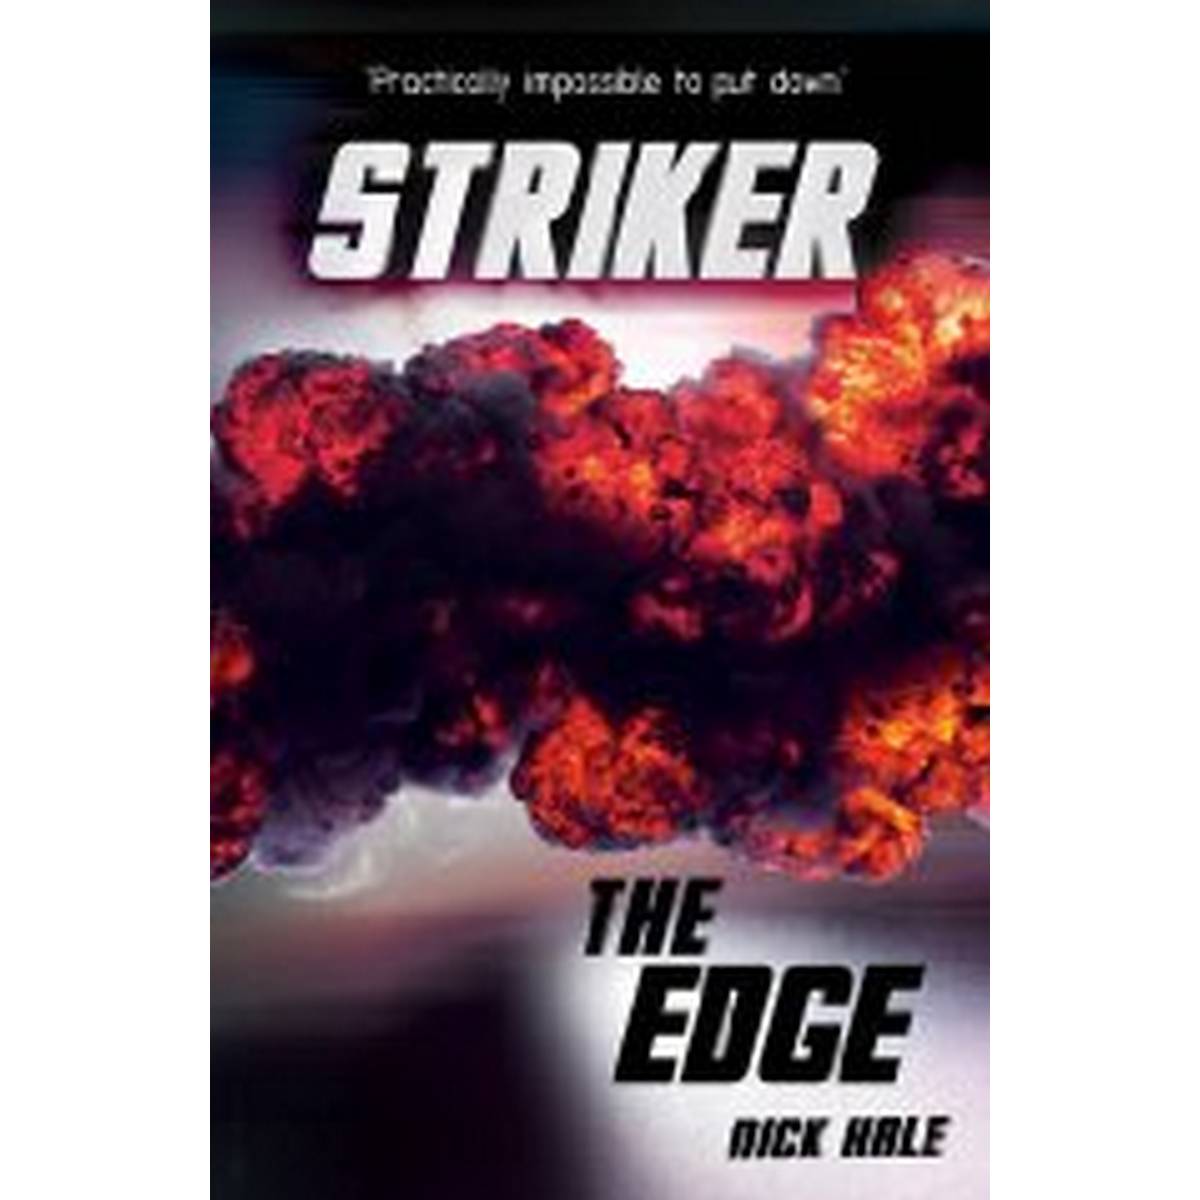 The Edge (Striker) 3